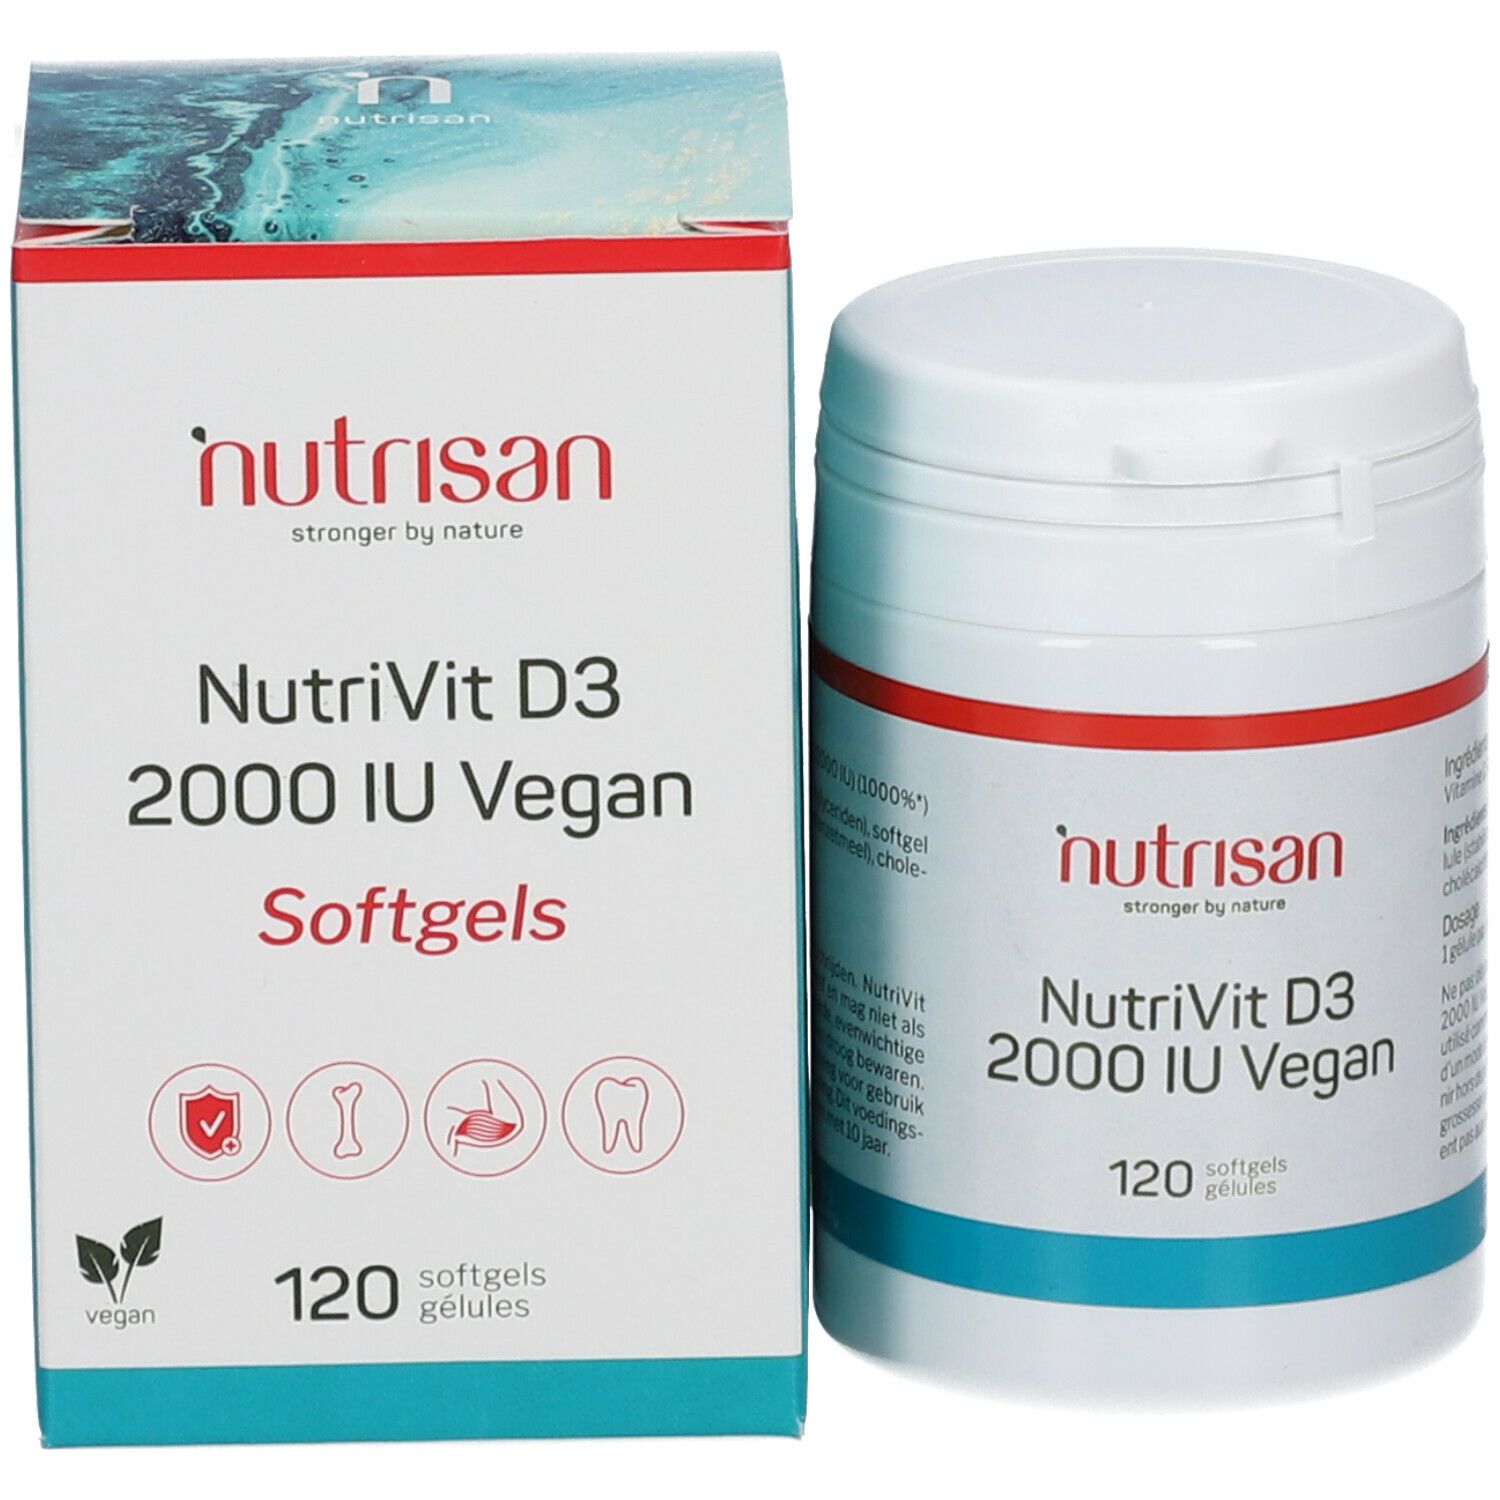 Nutrisan NutriVit D3 2000 IU Vegan